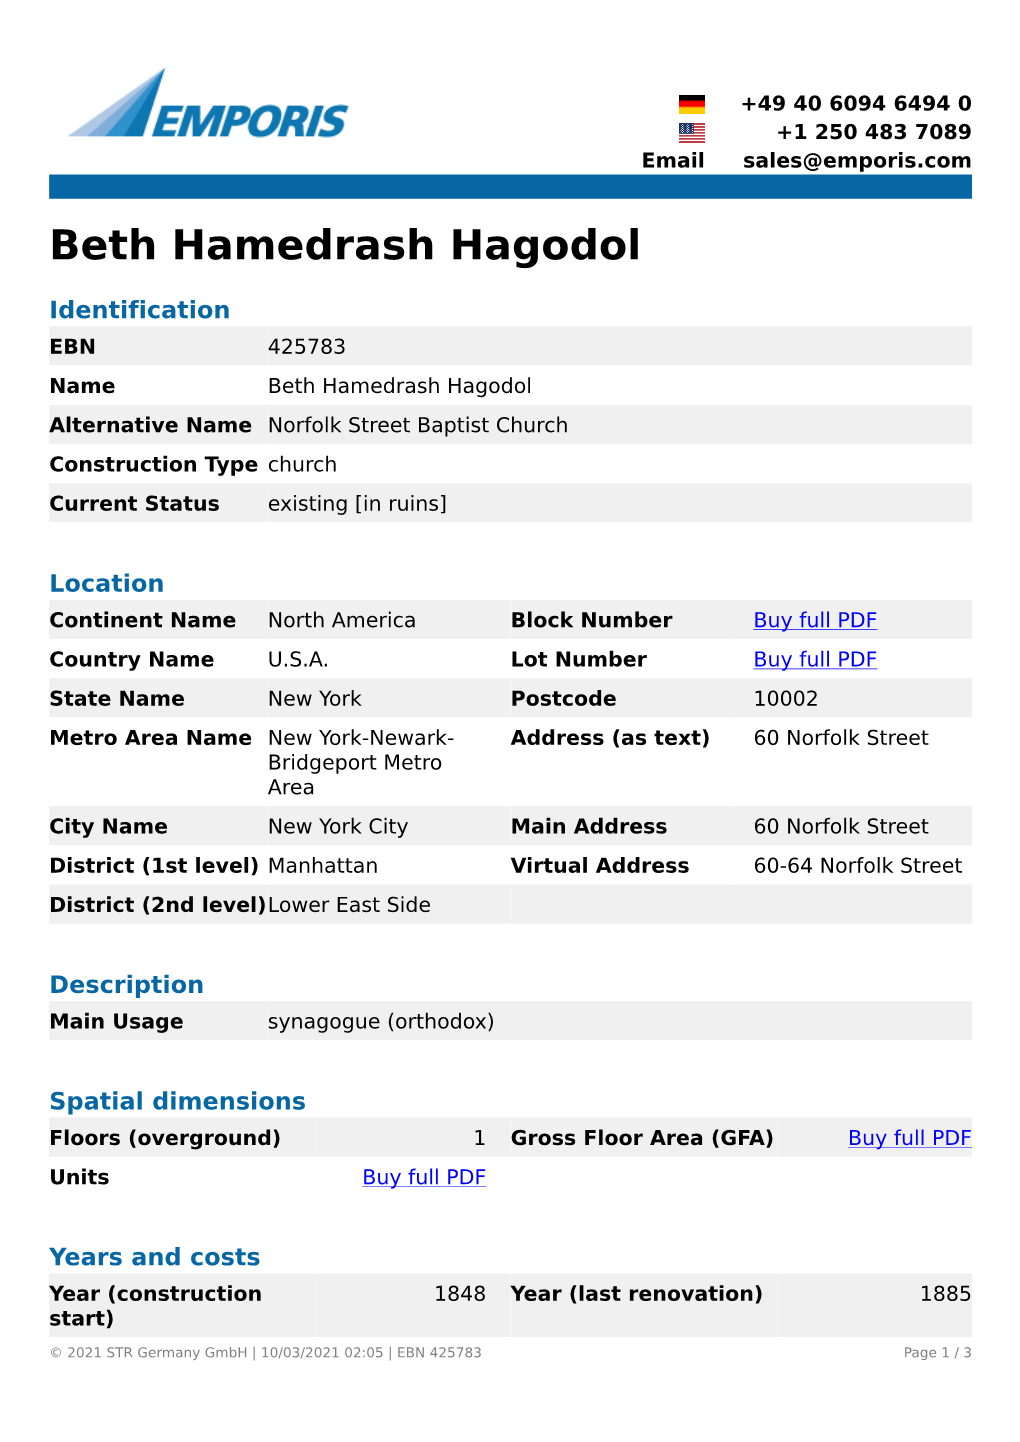 Beth Hamedrash Hagodol